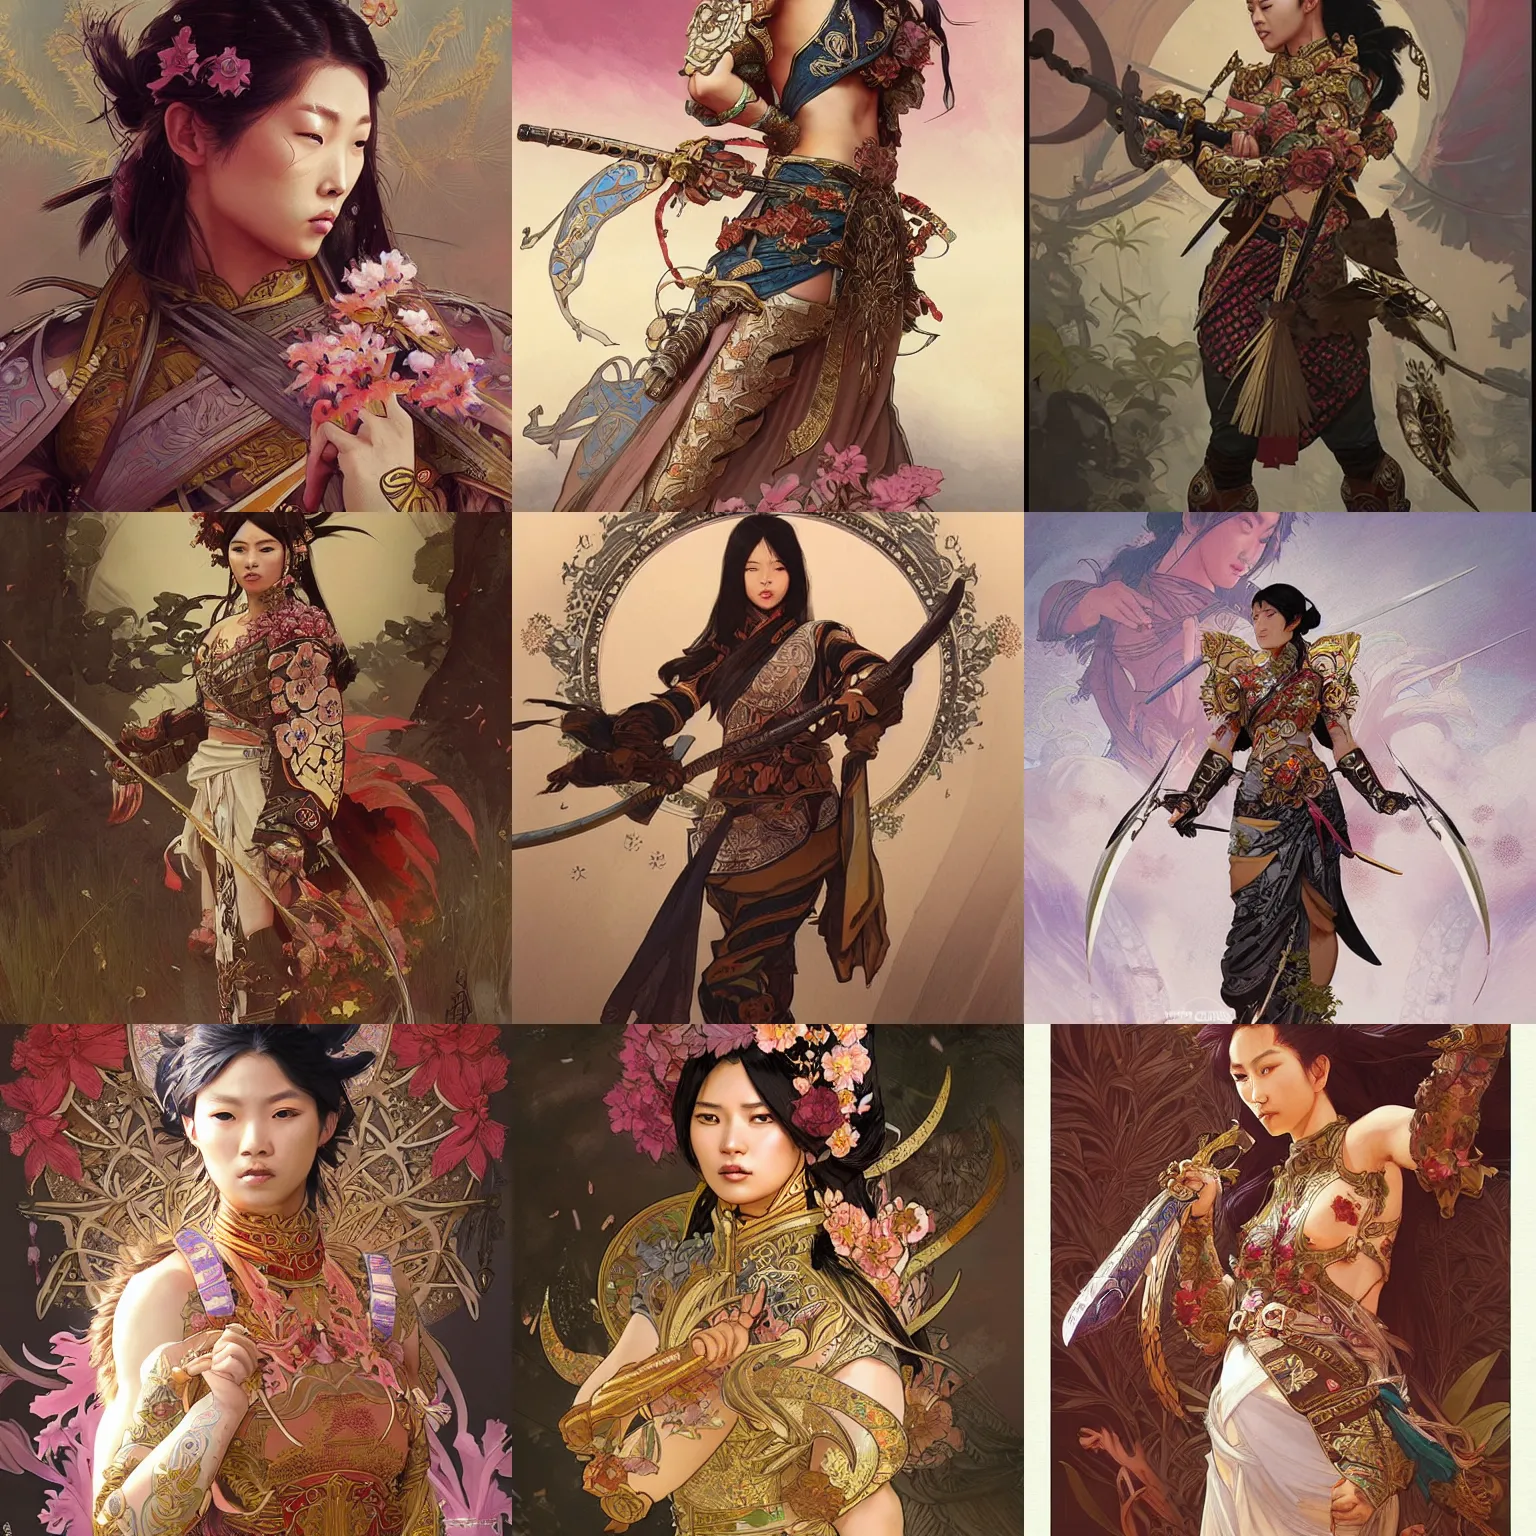 Prompt: A fierce Asian female warrior, floral armor, ornate by Artgerm, greg rutkowski and alphonse mucha